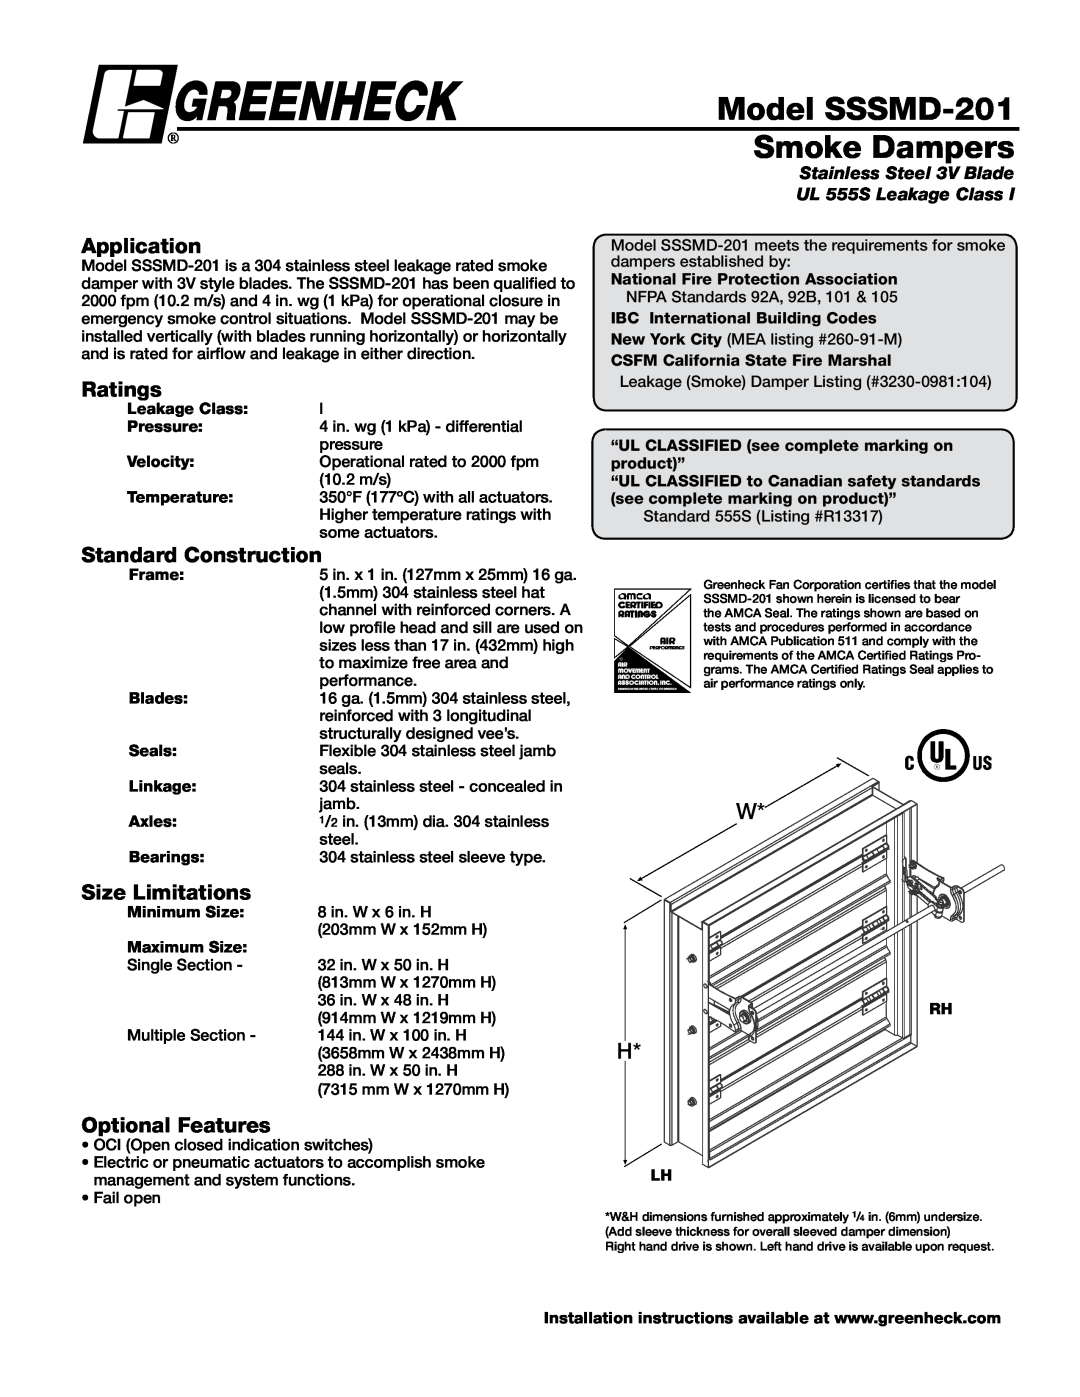 Greenheck Fan dimensions Model SSSMD-201 Smoke Dampers, Application, Ratings, Standard Construction, Size Limitations 